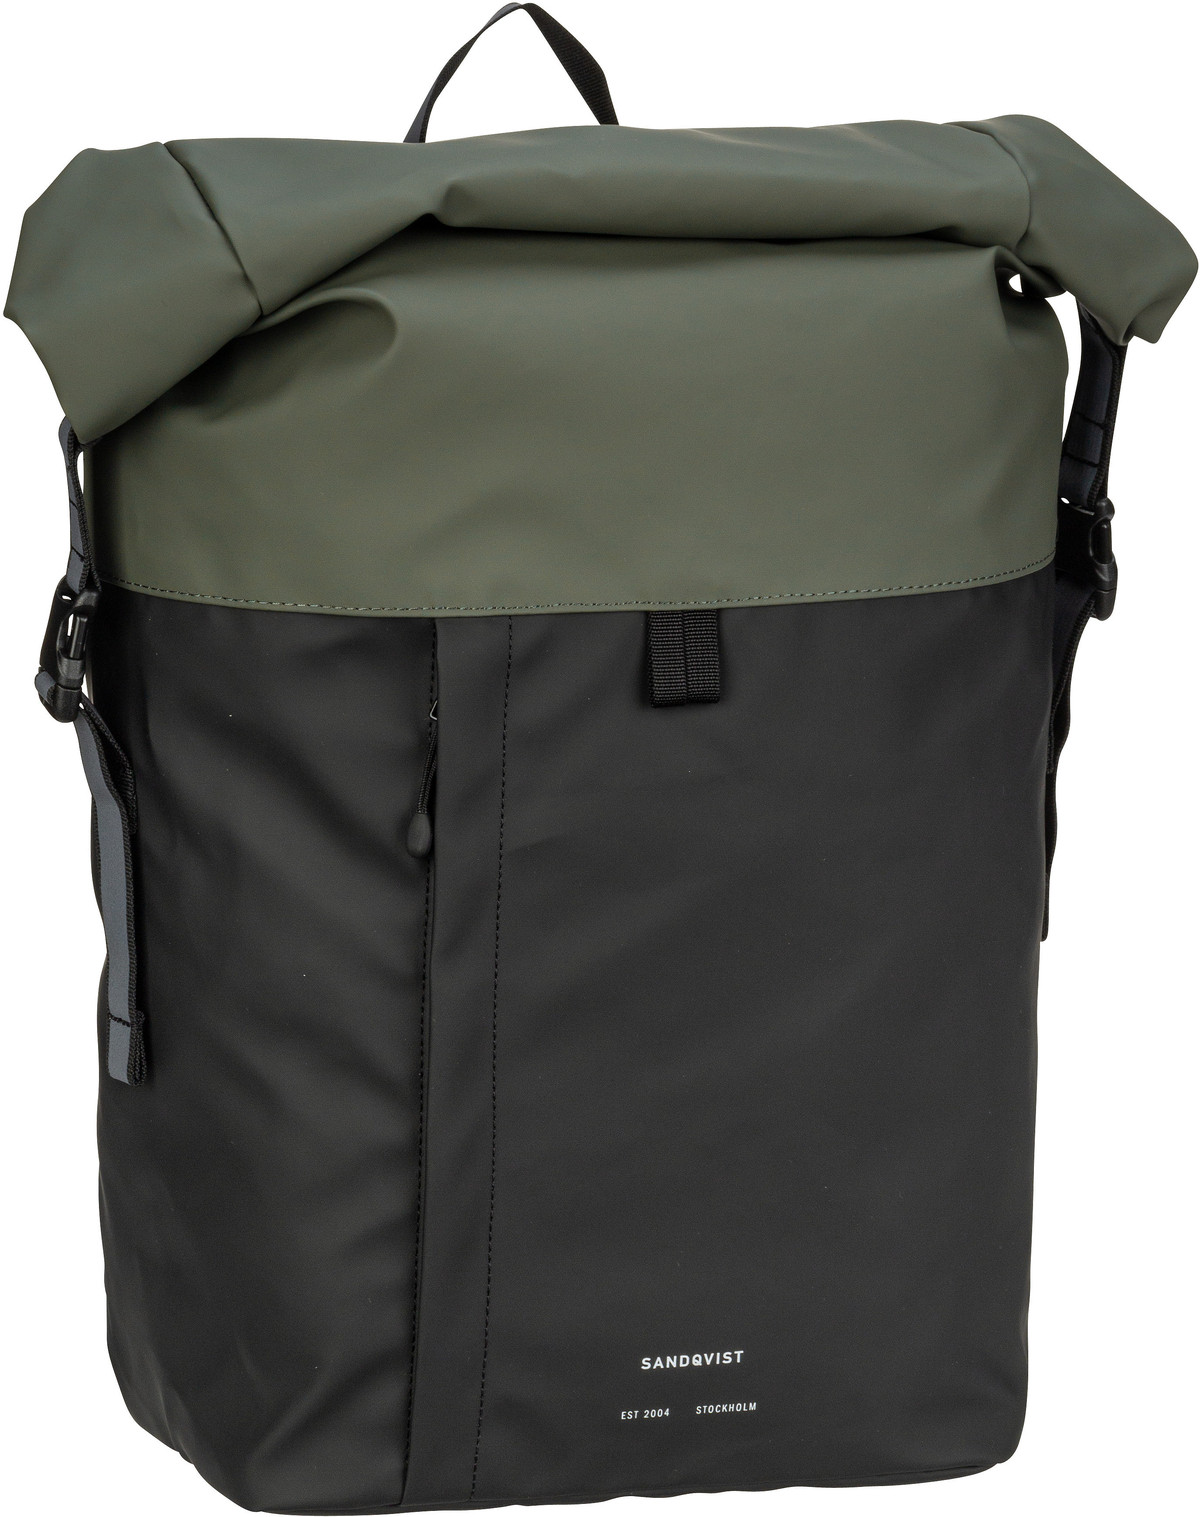 Sandqvist Konrad Backpack  in Multi Black/Lichen Green (18 Liter), Rucksack / Backpack